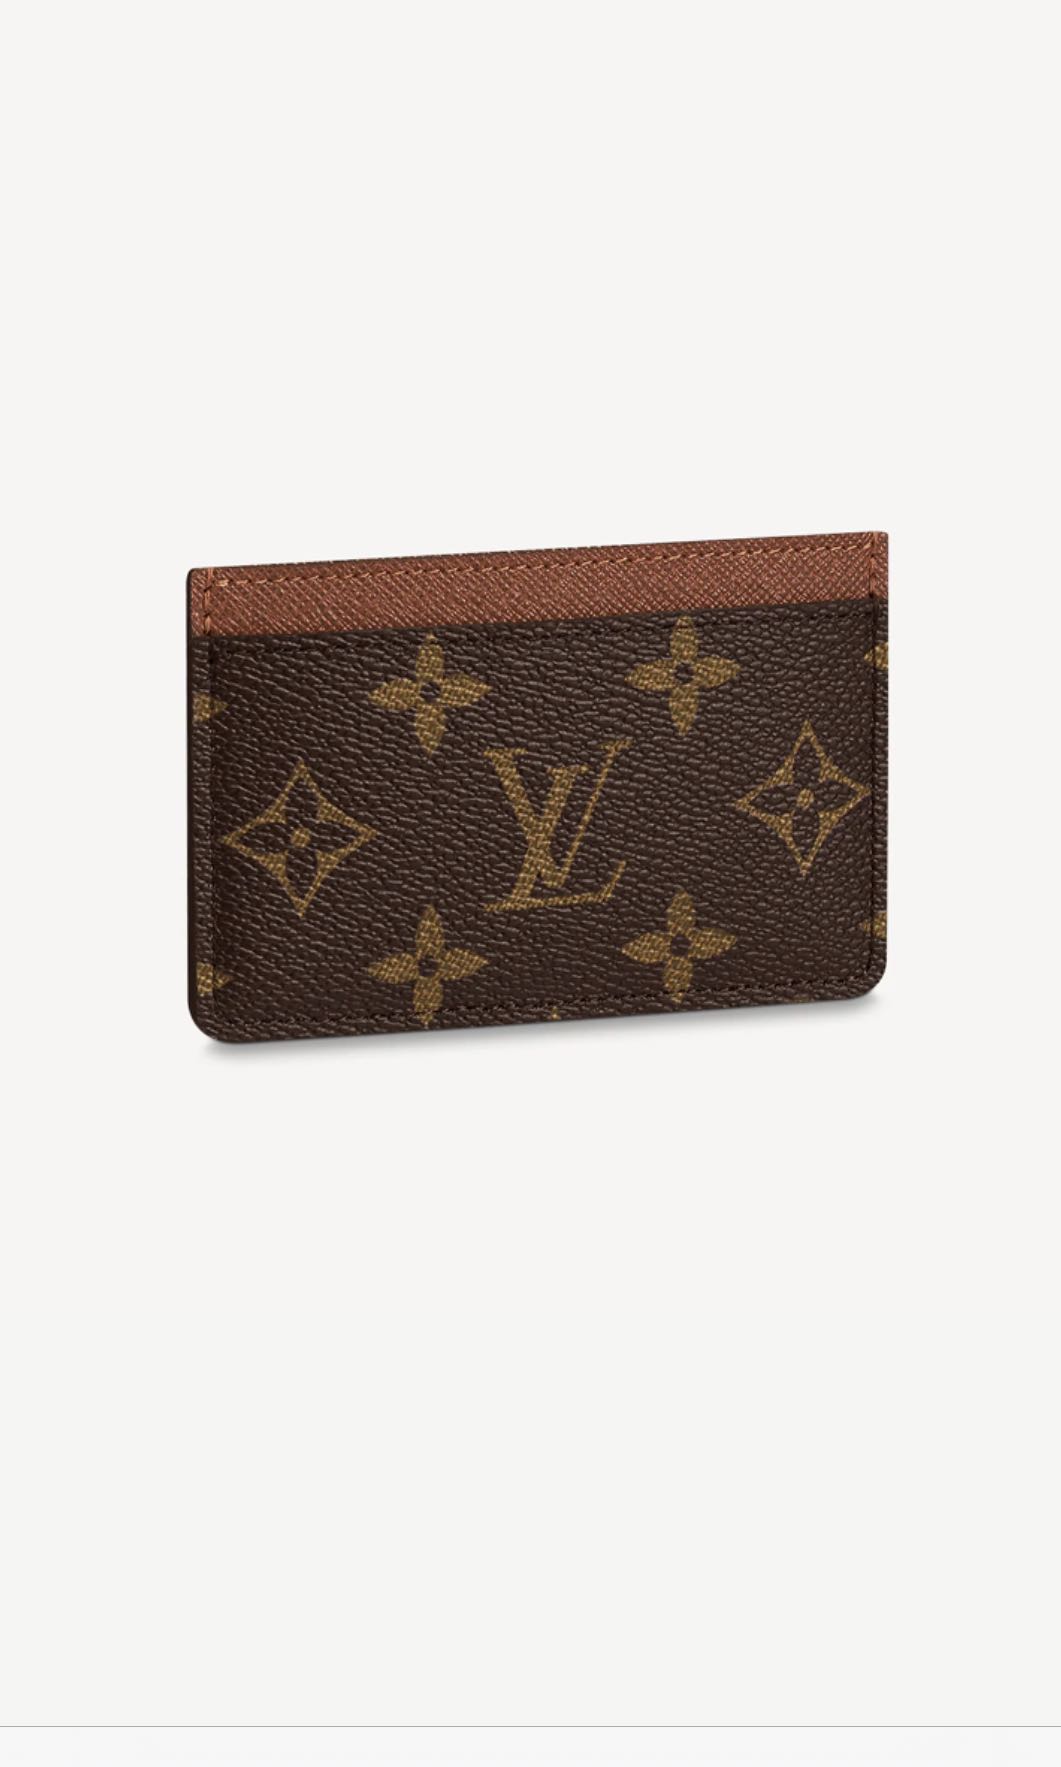 Louis Vuitton Petite Card Holder Monogram Canvas M61733 